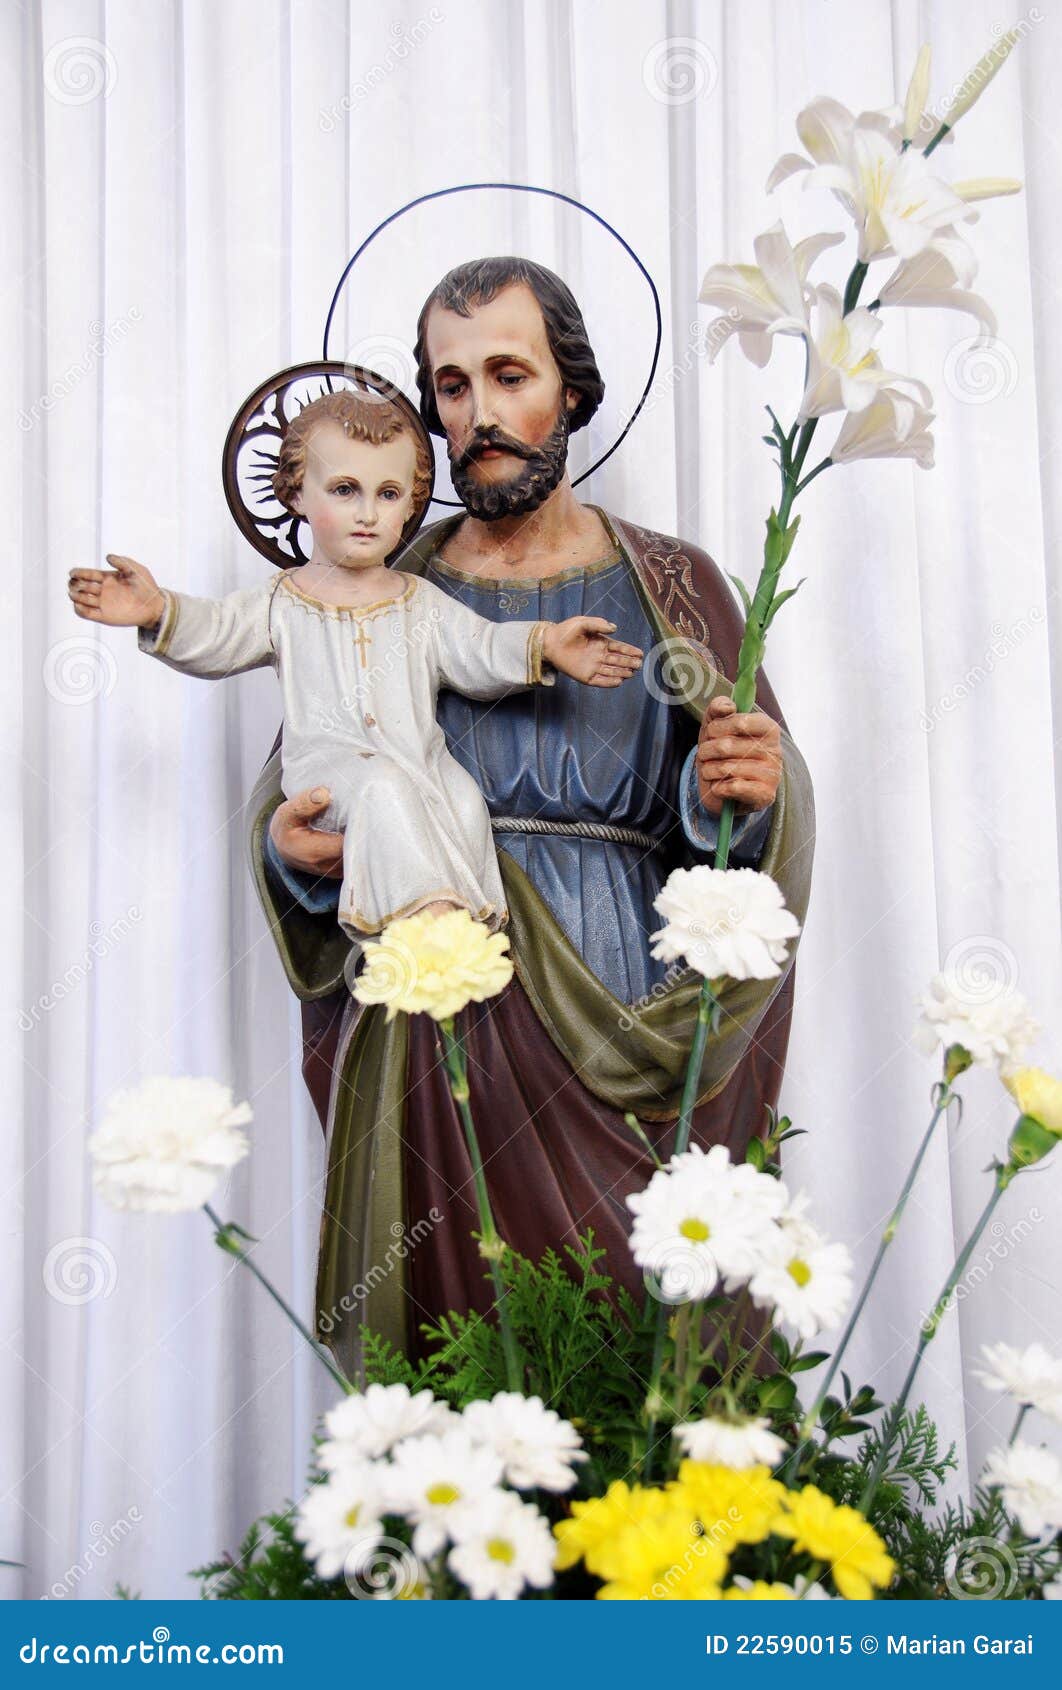 saint joseph with little jesus